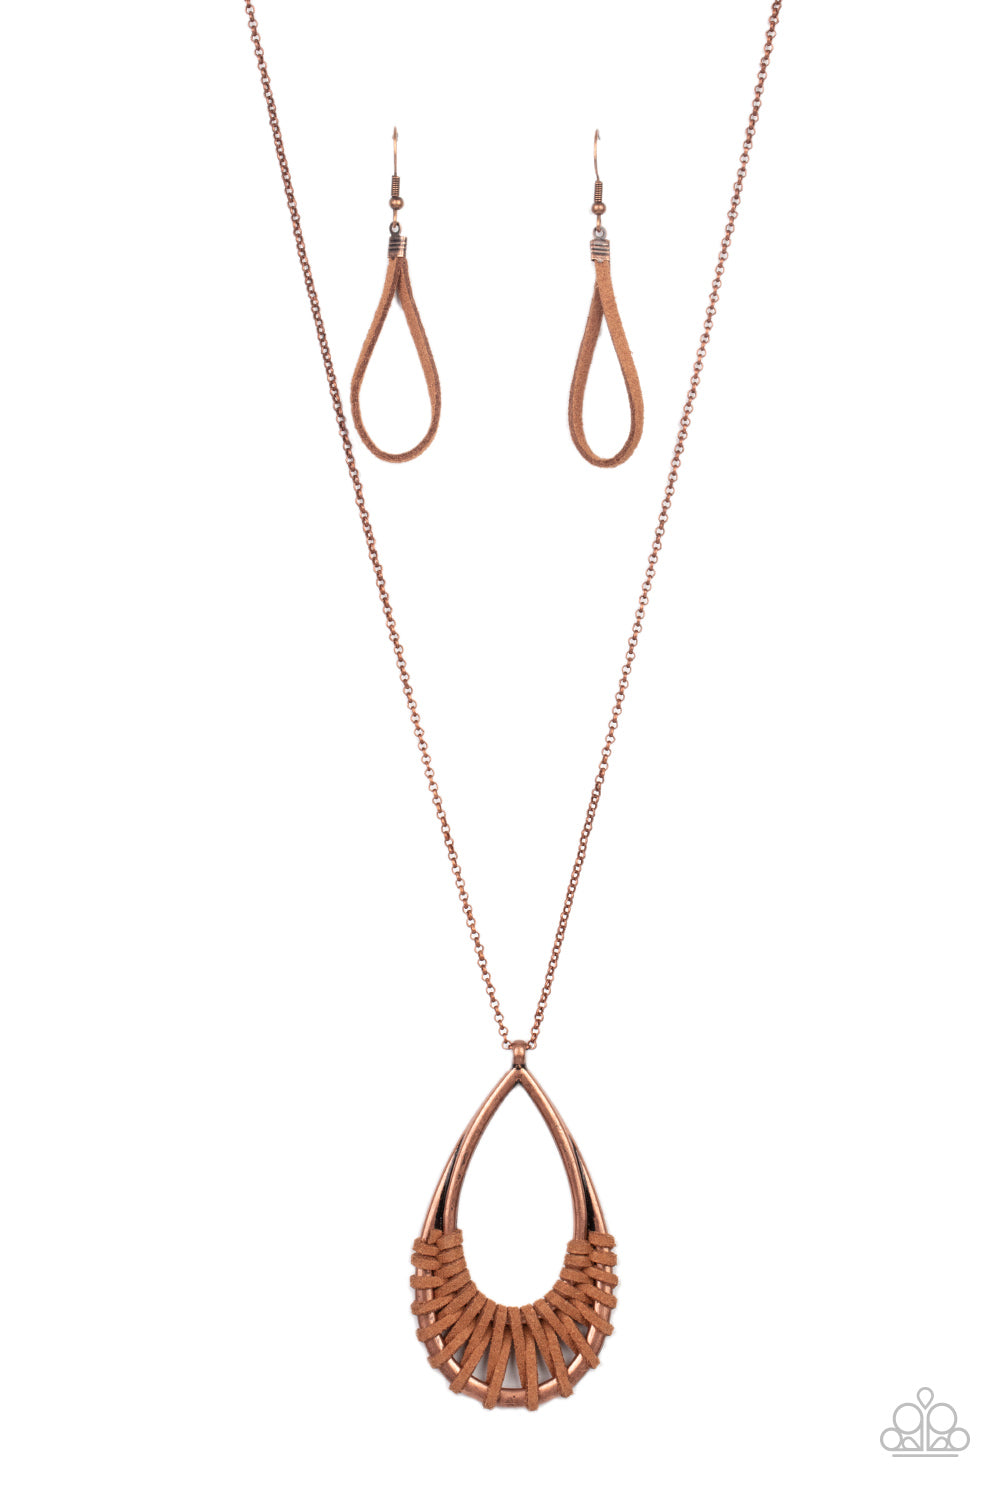 Homespun Artifact - copper - Paparazzi necklace